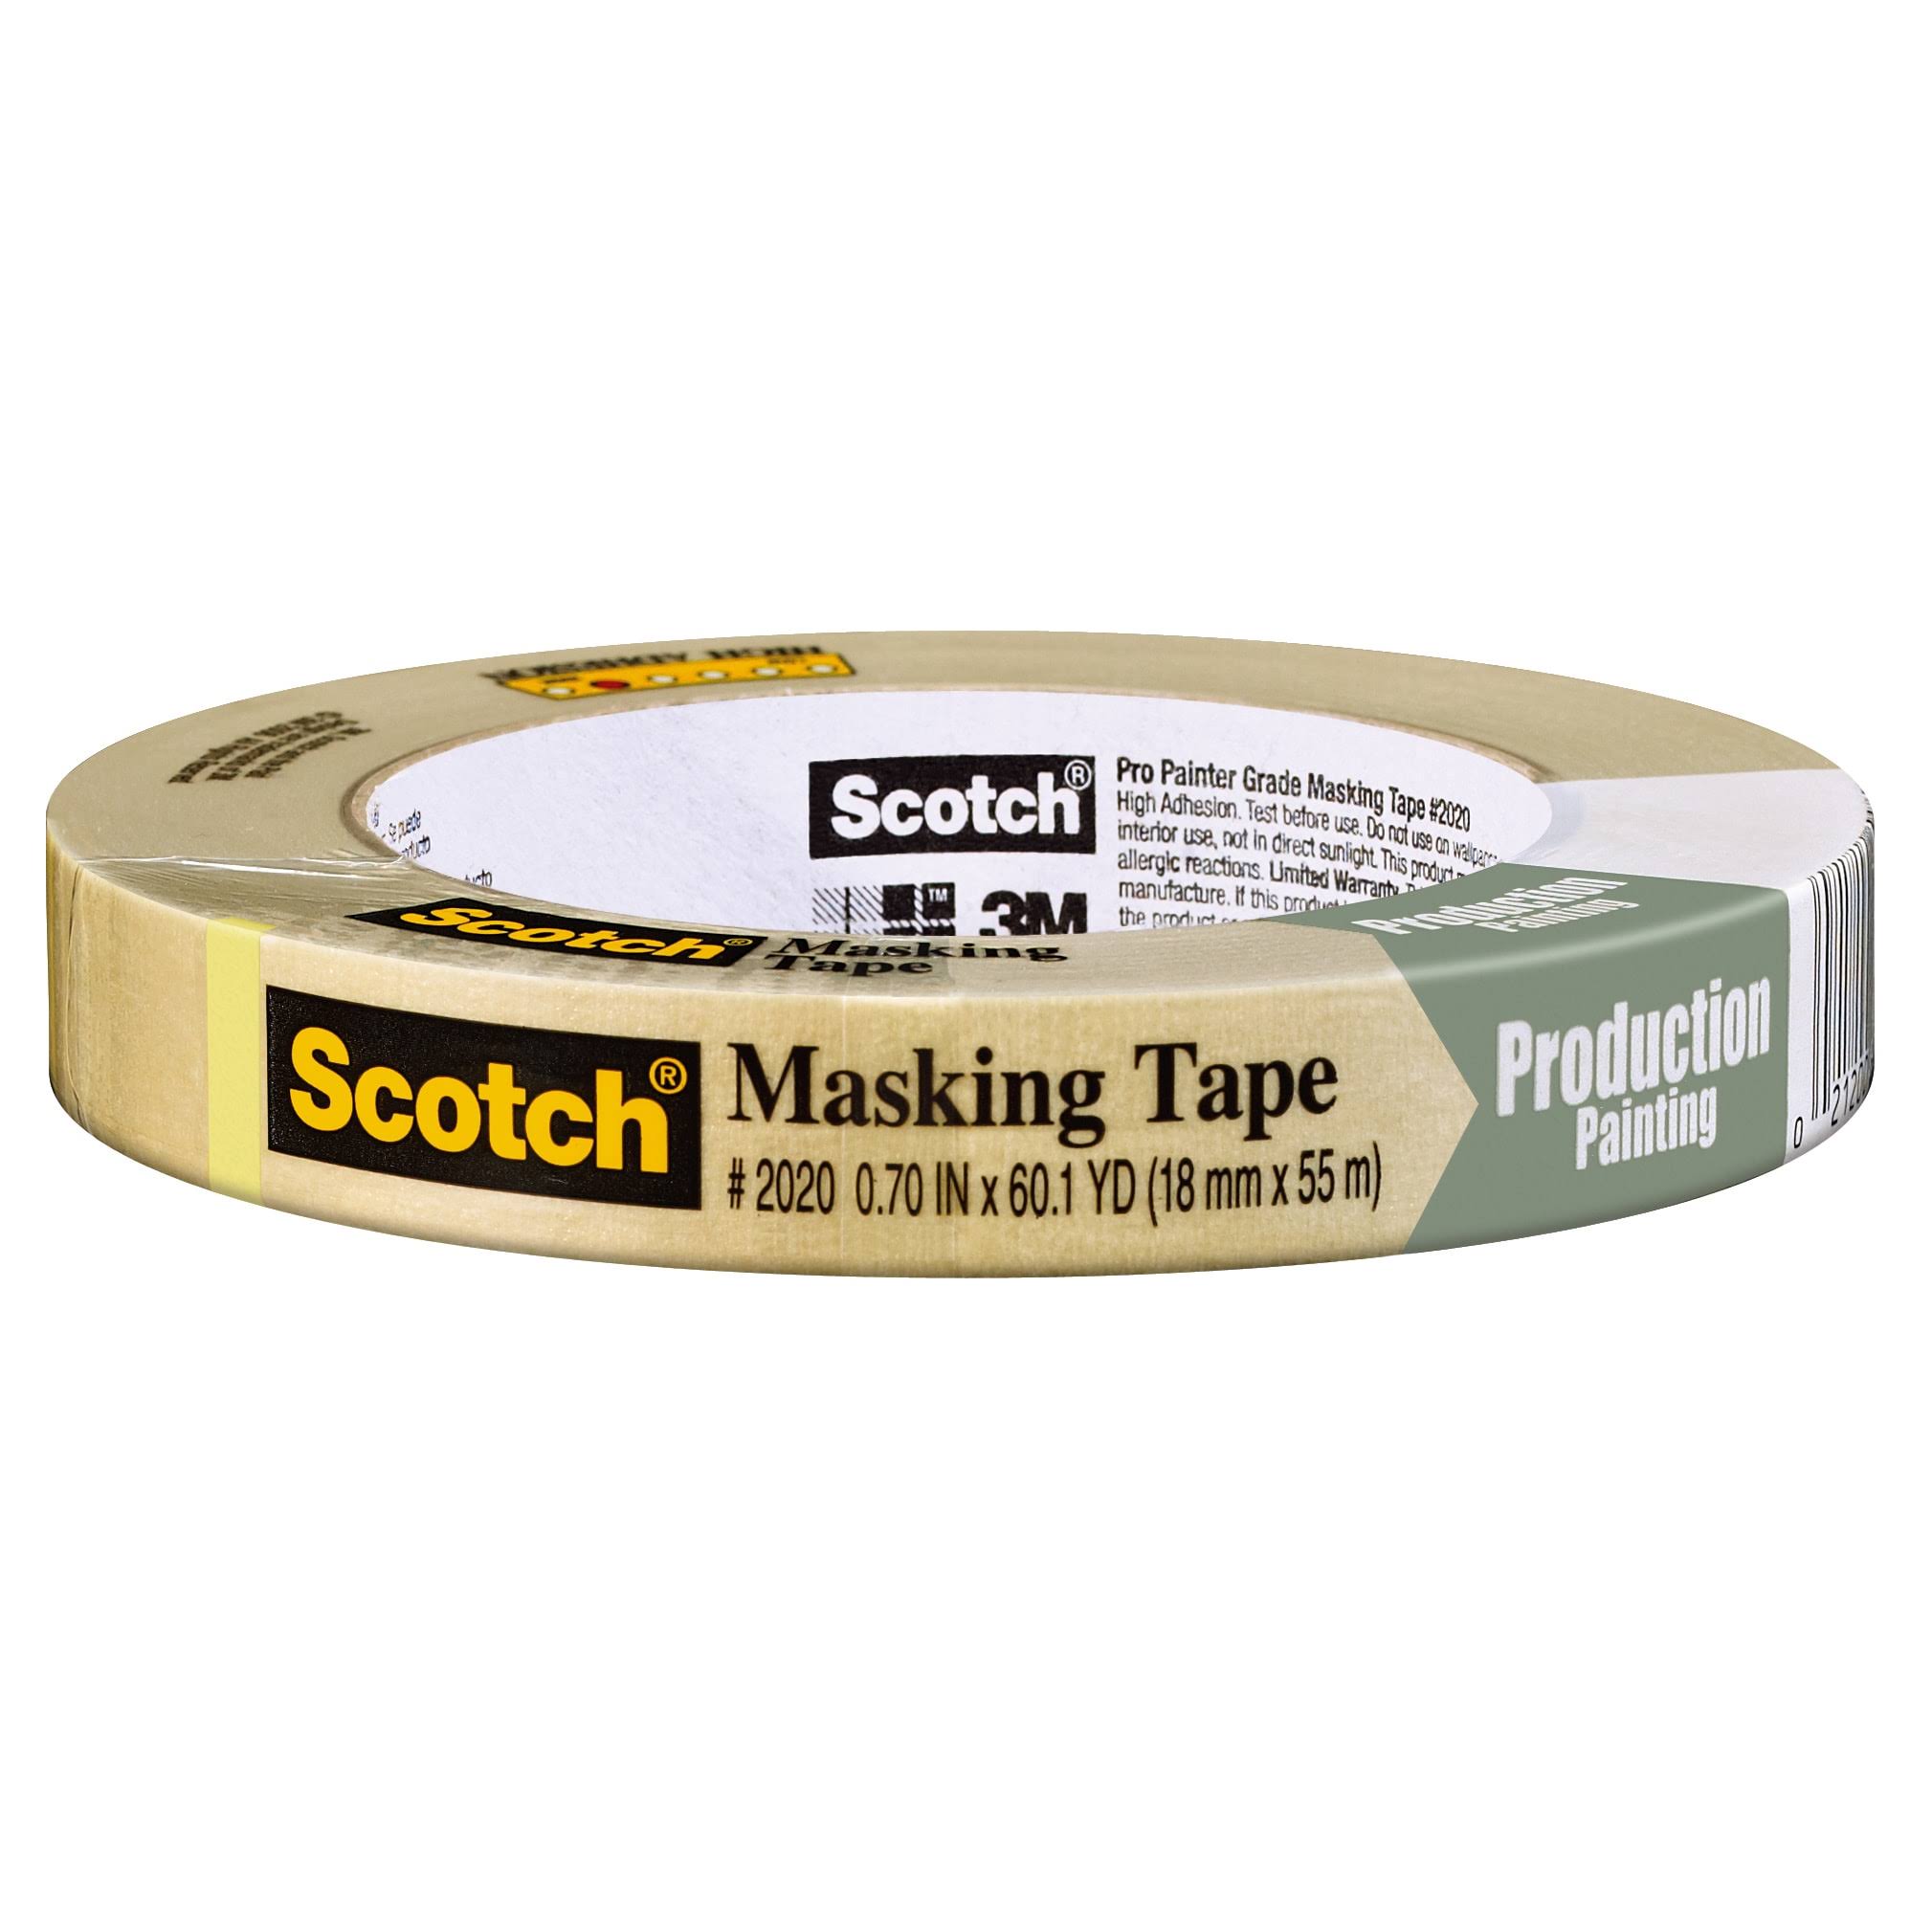 3M Scotch Masking Tape - Production Painting, 18mm x55m